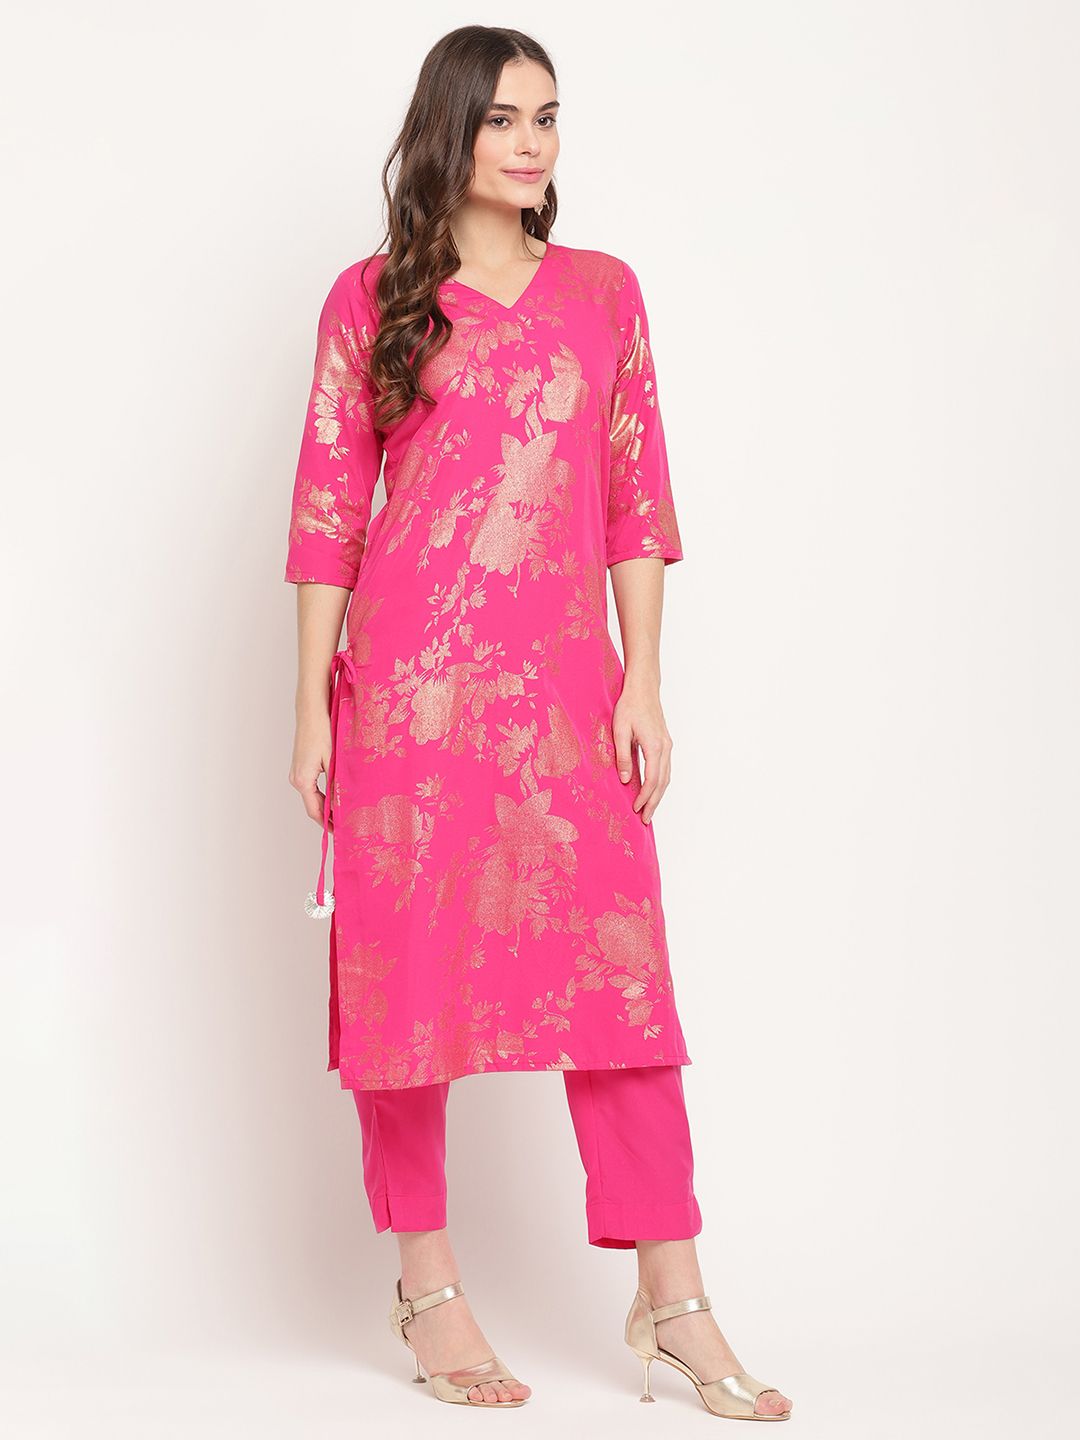 Ahalyaa Dark Pink Crepe Printed Salwar Suit Sets With Dupatta